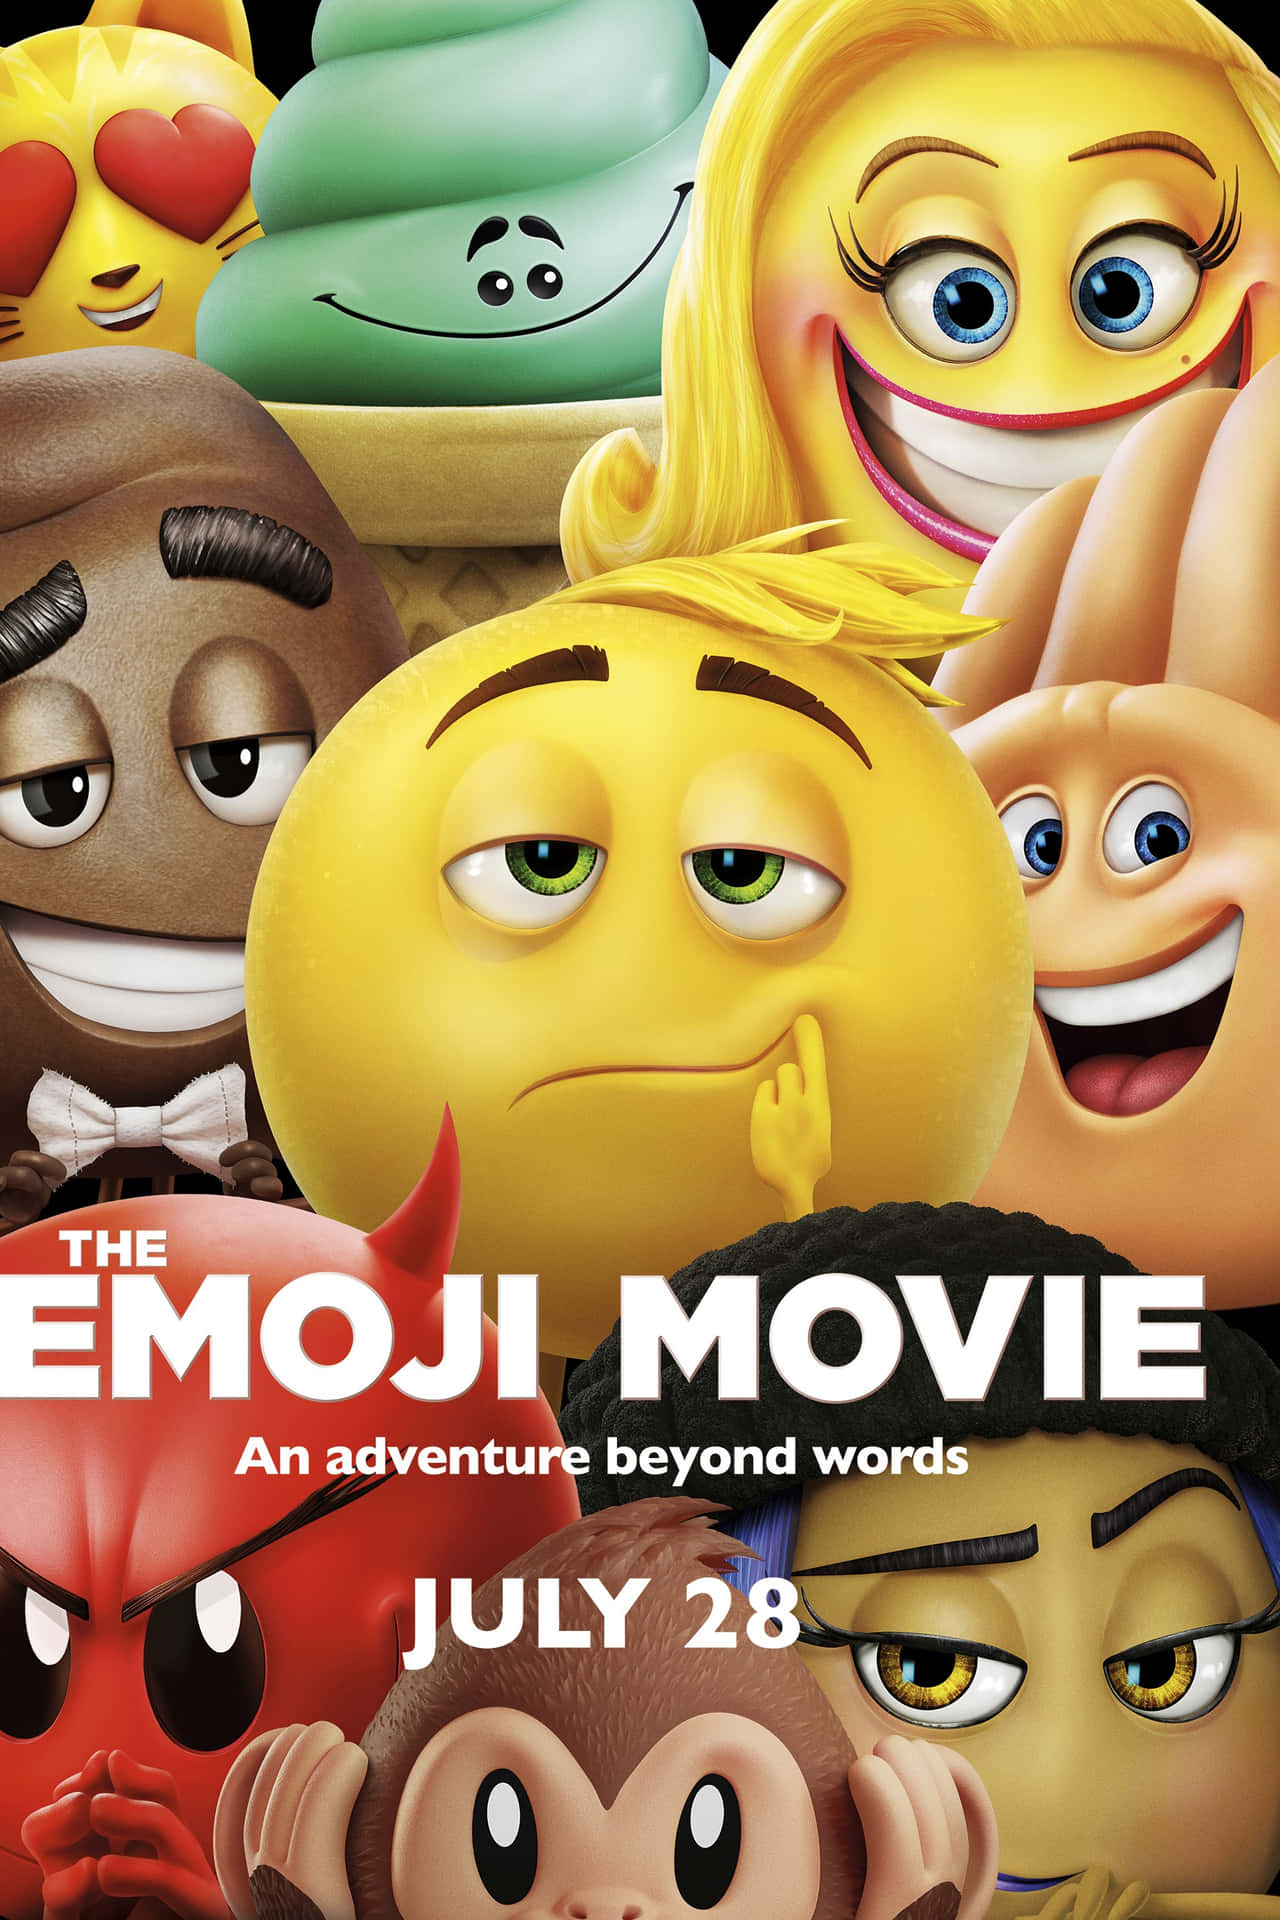 The Emoji Movie 2017 Poster Wallpaper